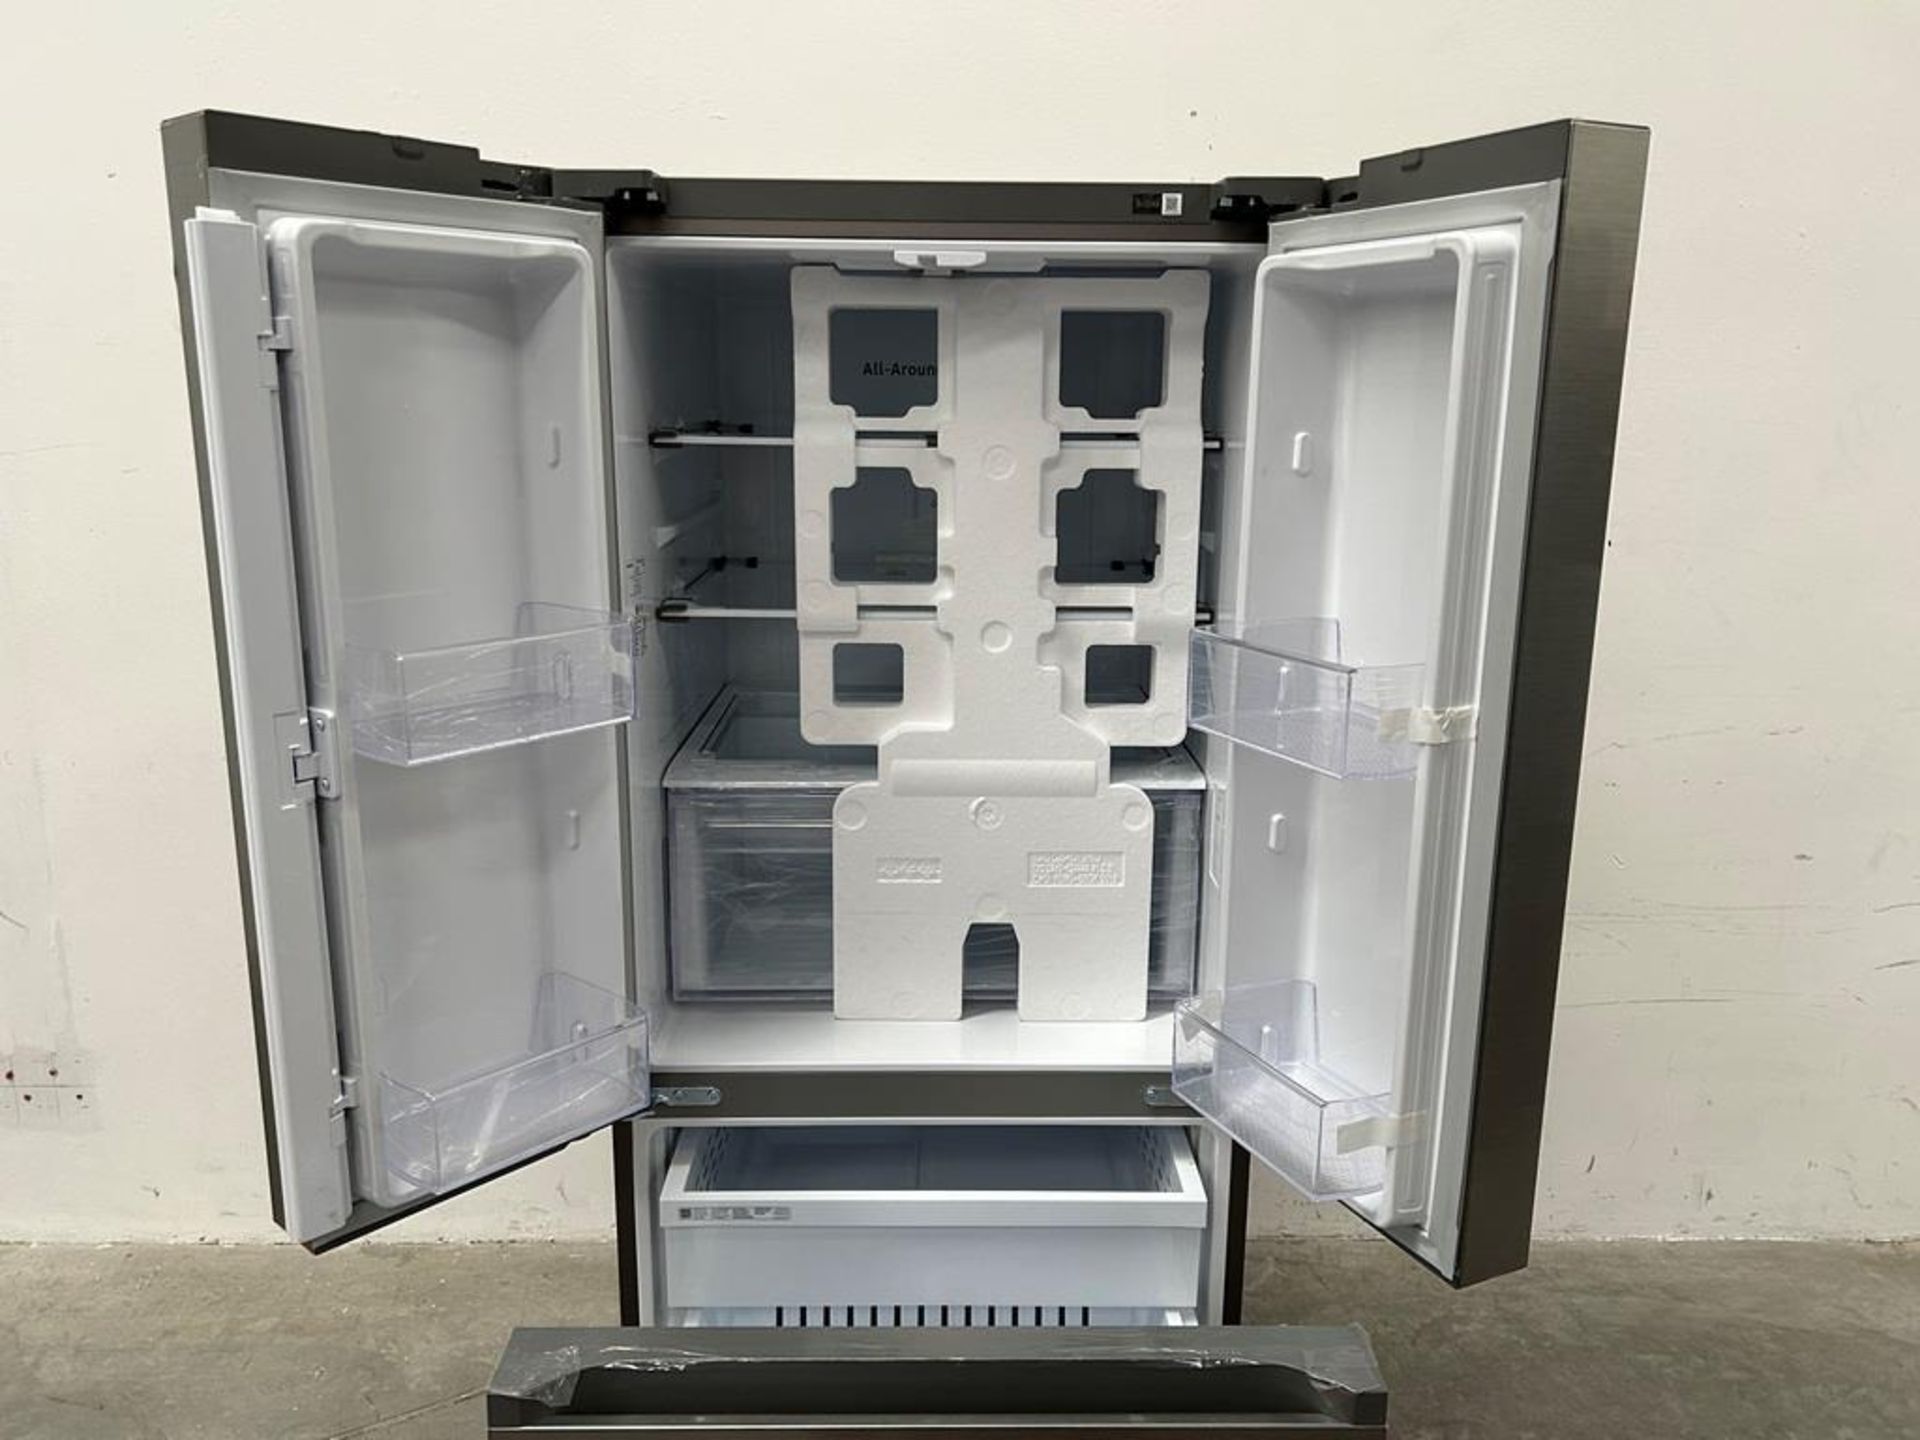 (NUEVO) Refrigerador Marca SAMSUNG, Modelo RF22A4010S9, Serie 400509W, Color GRIS (golpe ligero fro - Image 5 of 12